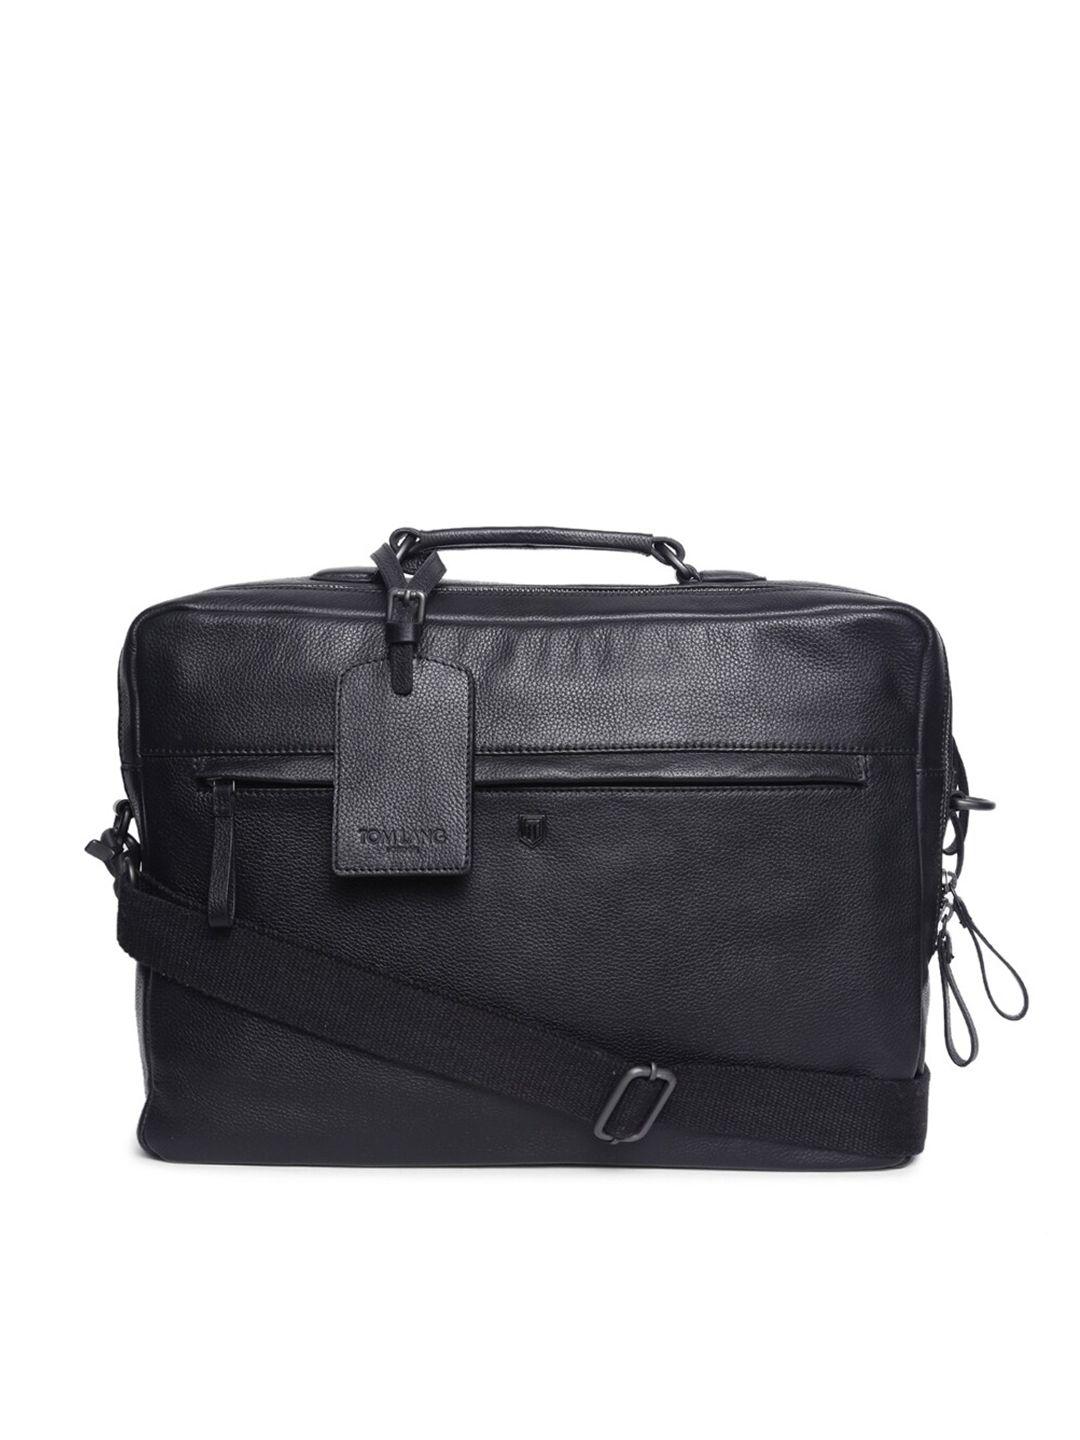 tom lang london unisex black textured leather 16 inch laptop bag